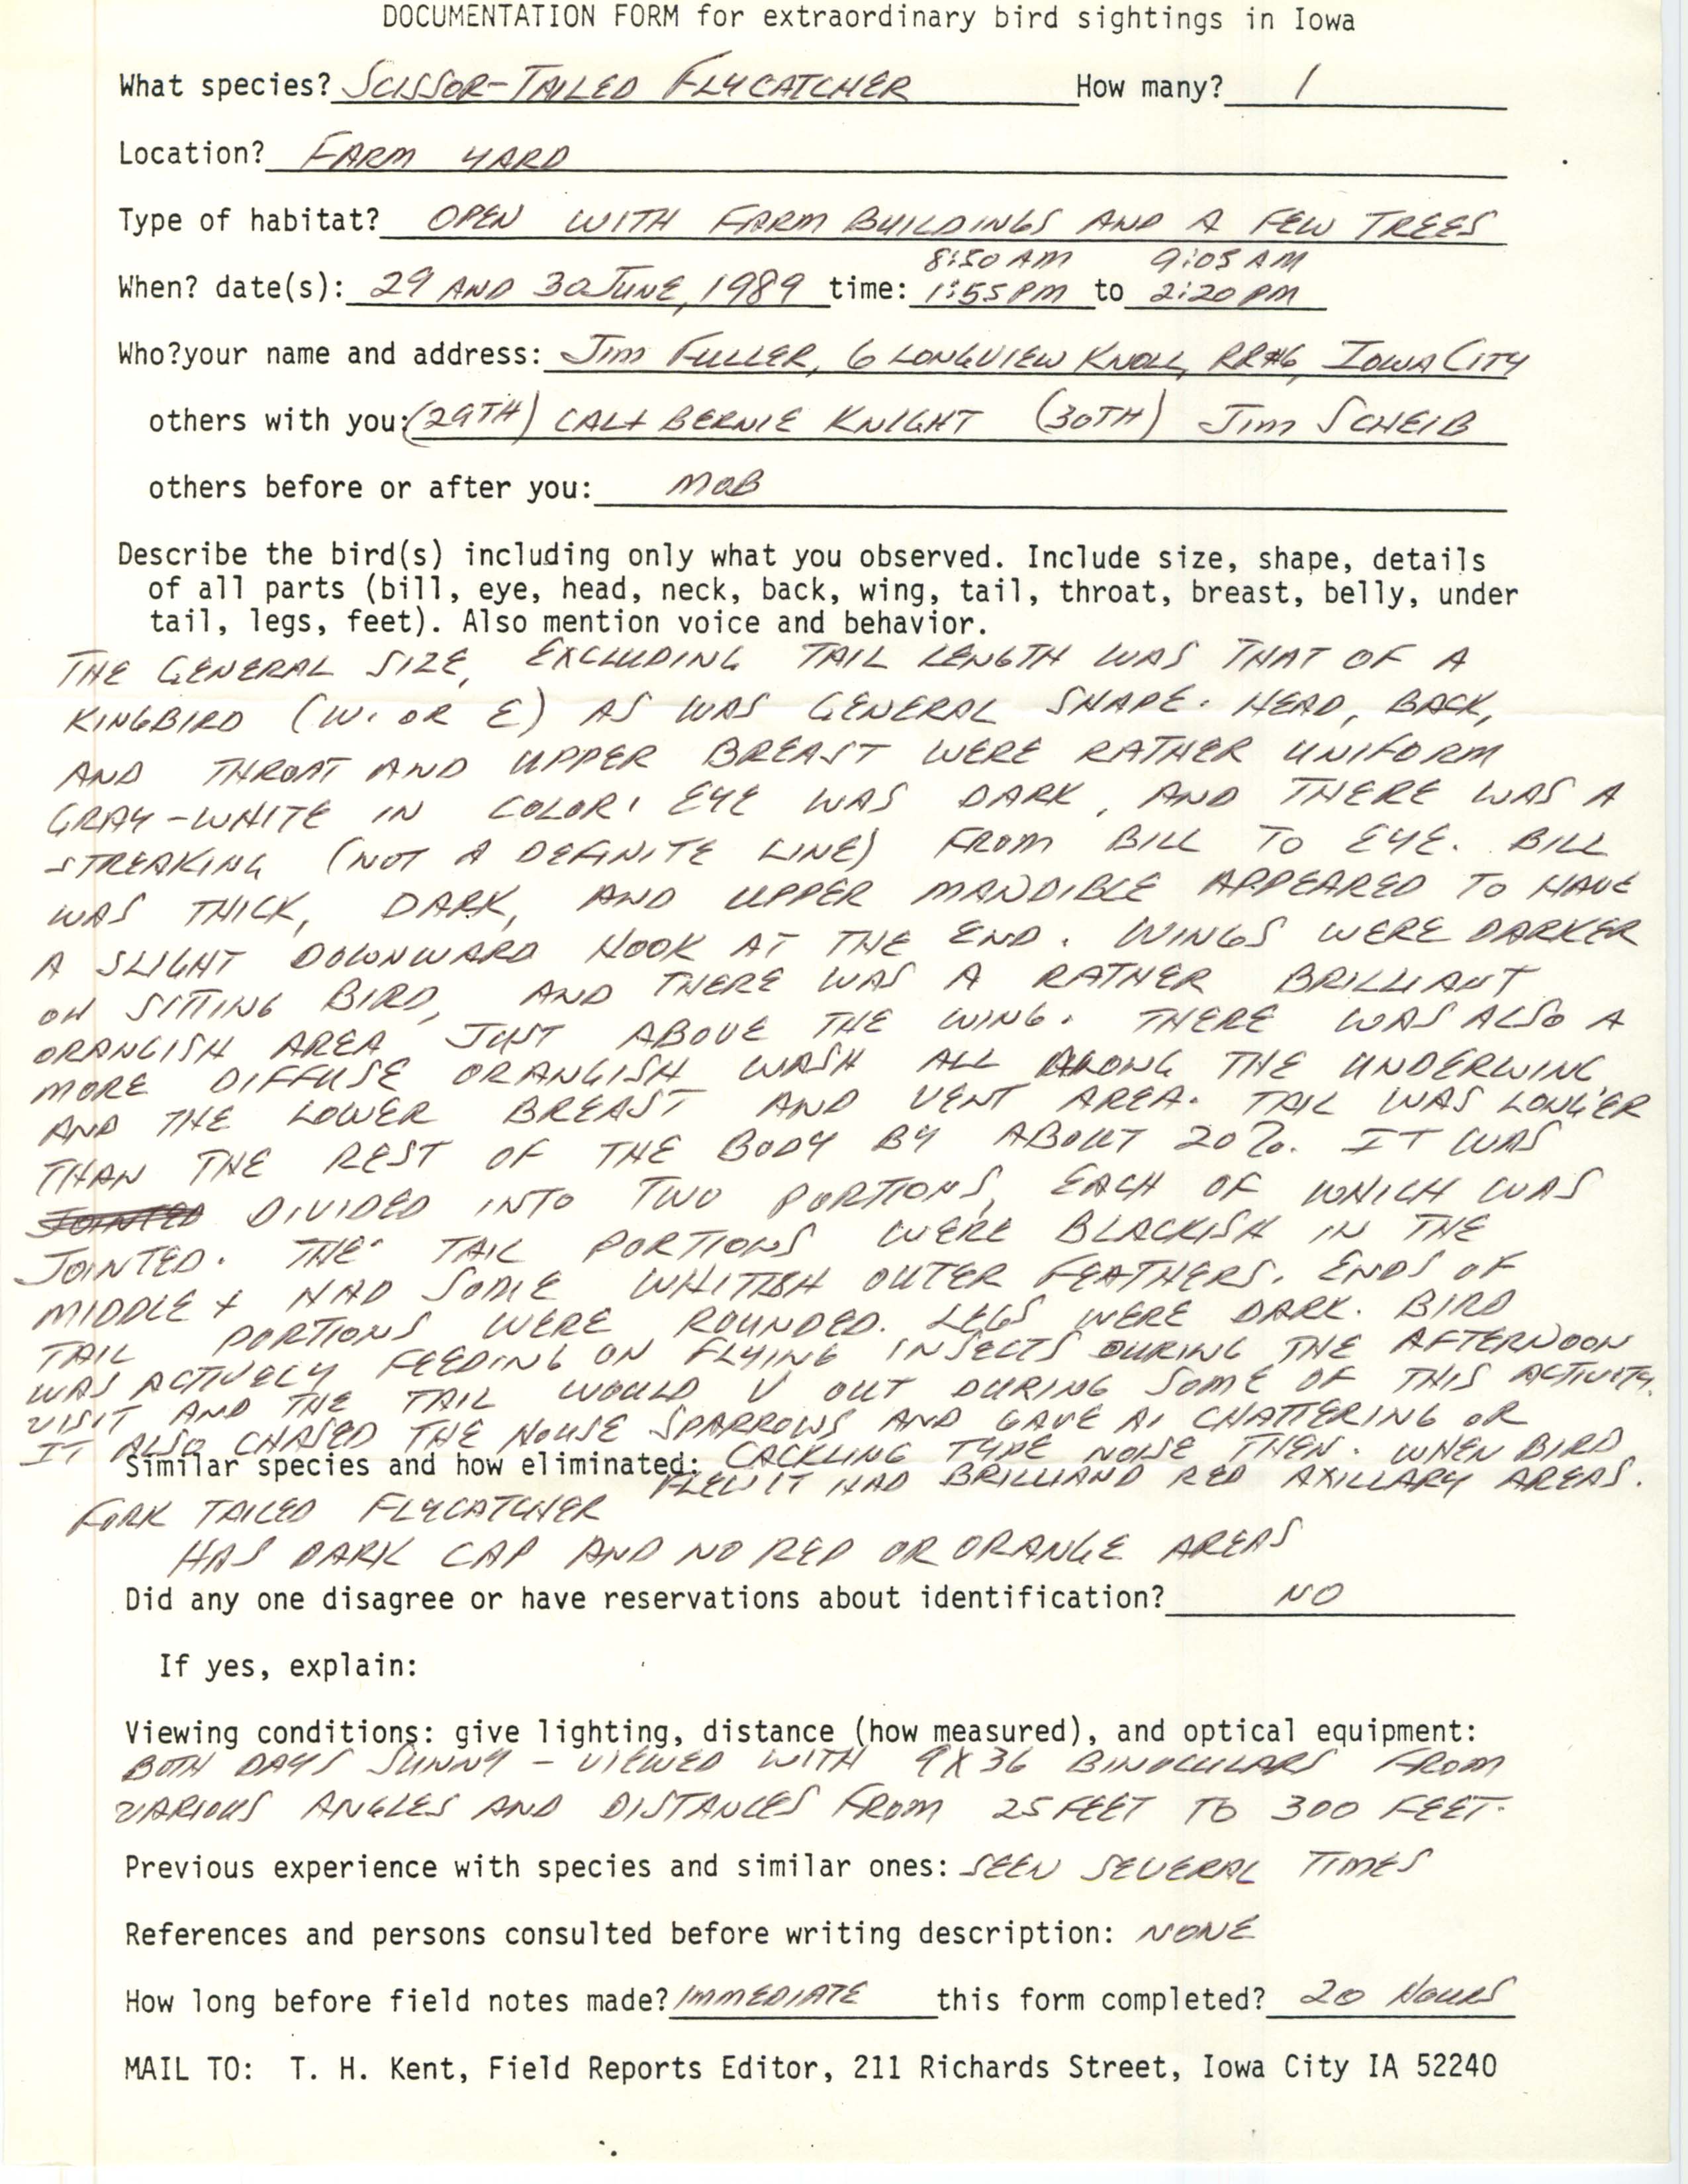 Rare bird documentation form for Scissor-tailed Flycatcher at Crawfordsville in 1989